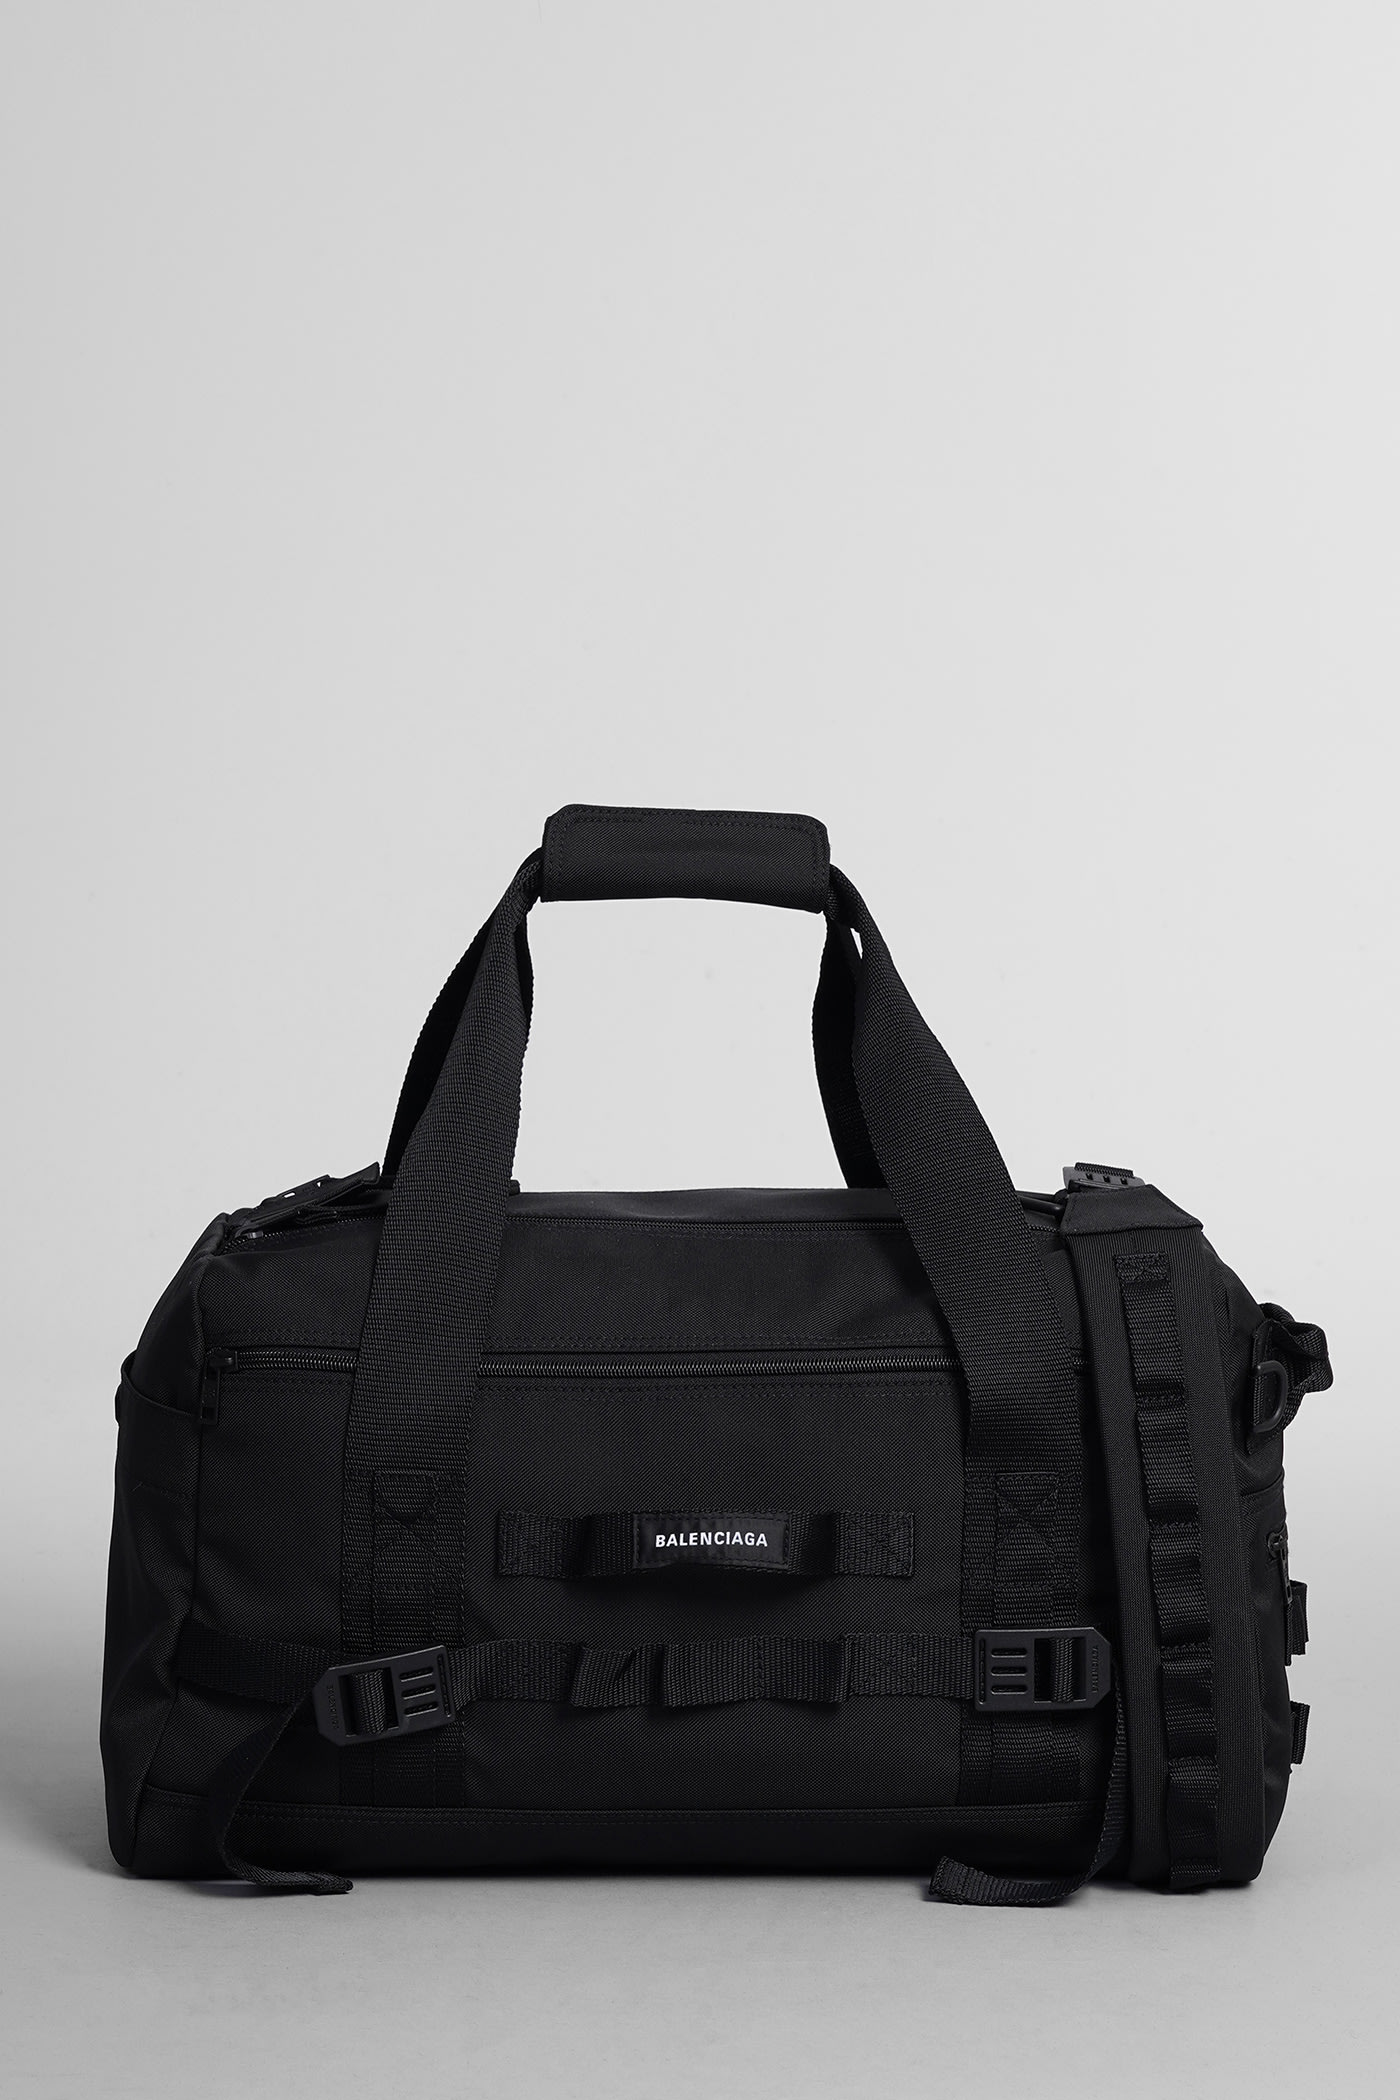 Balenciaga Army Duffle Hand Bag In Black Polyamide | italist